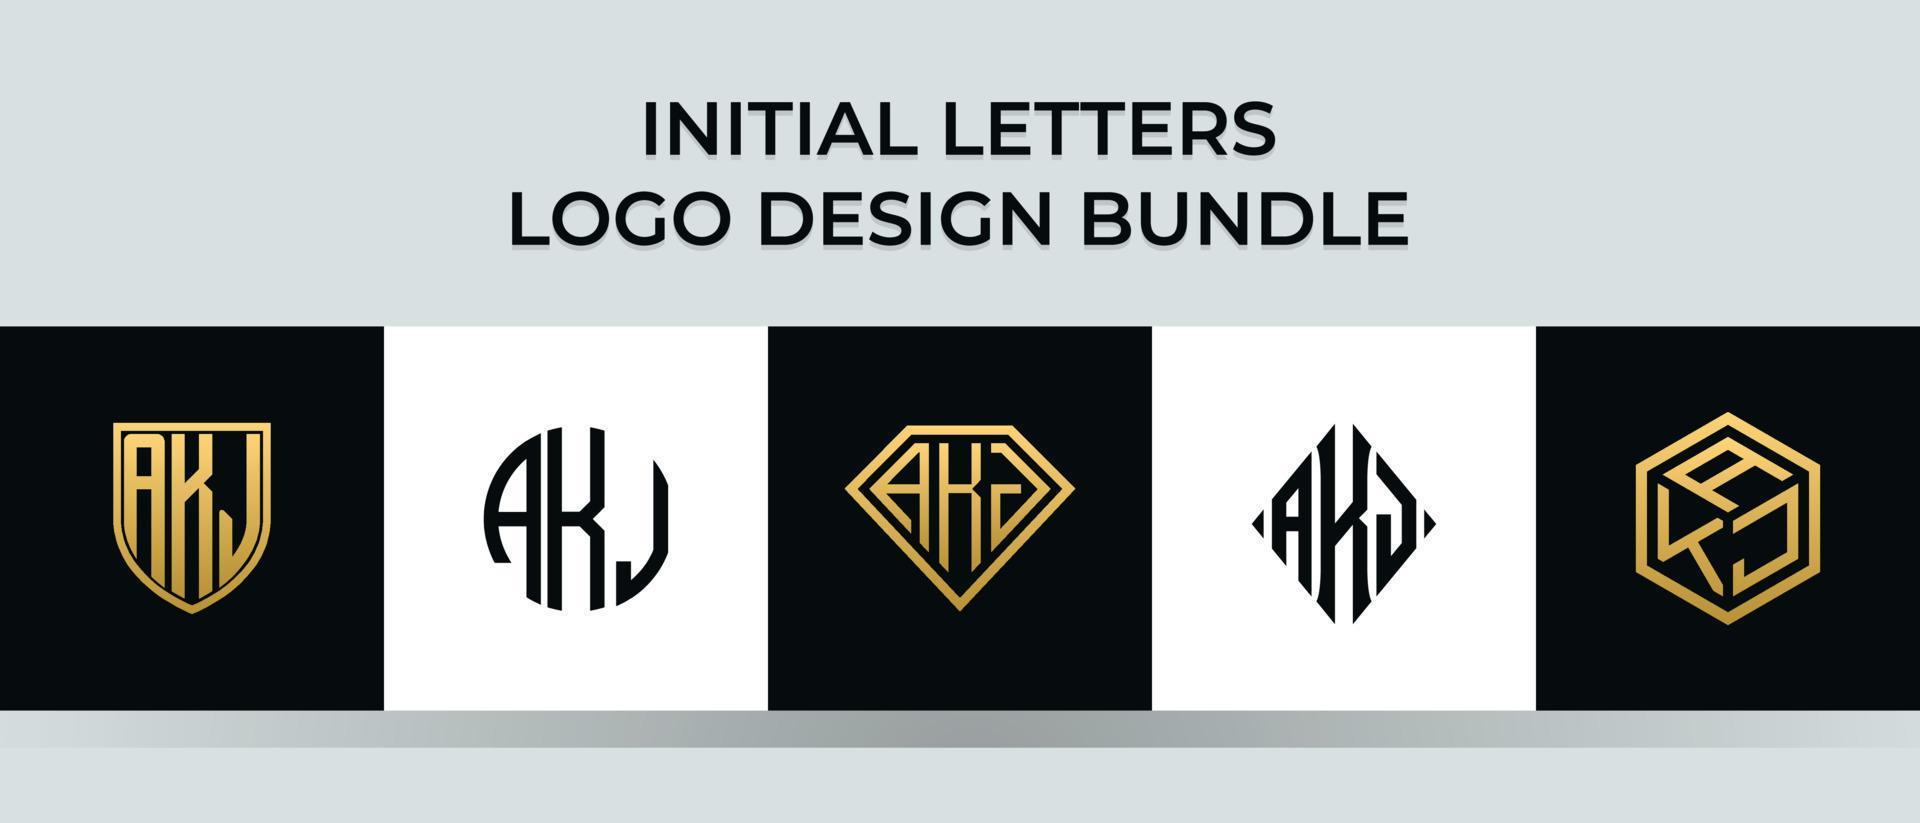 Initial letters AKJ logo designs Bundle vector